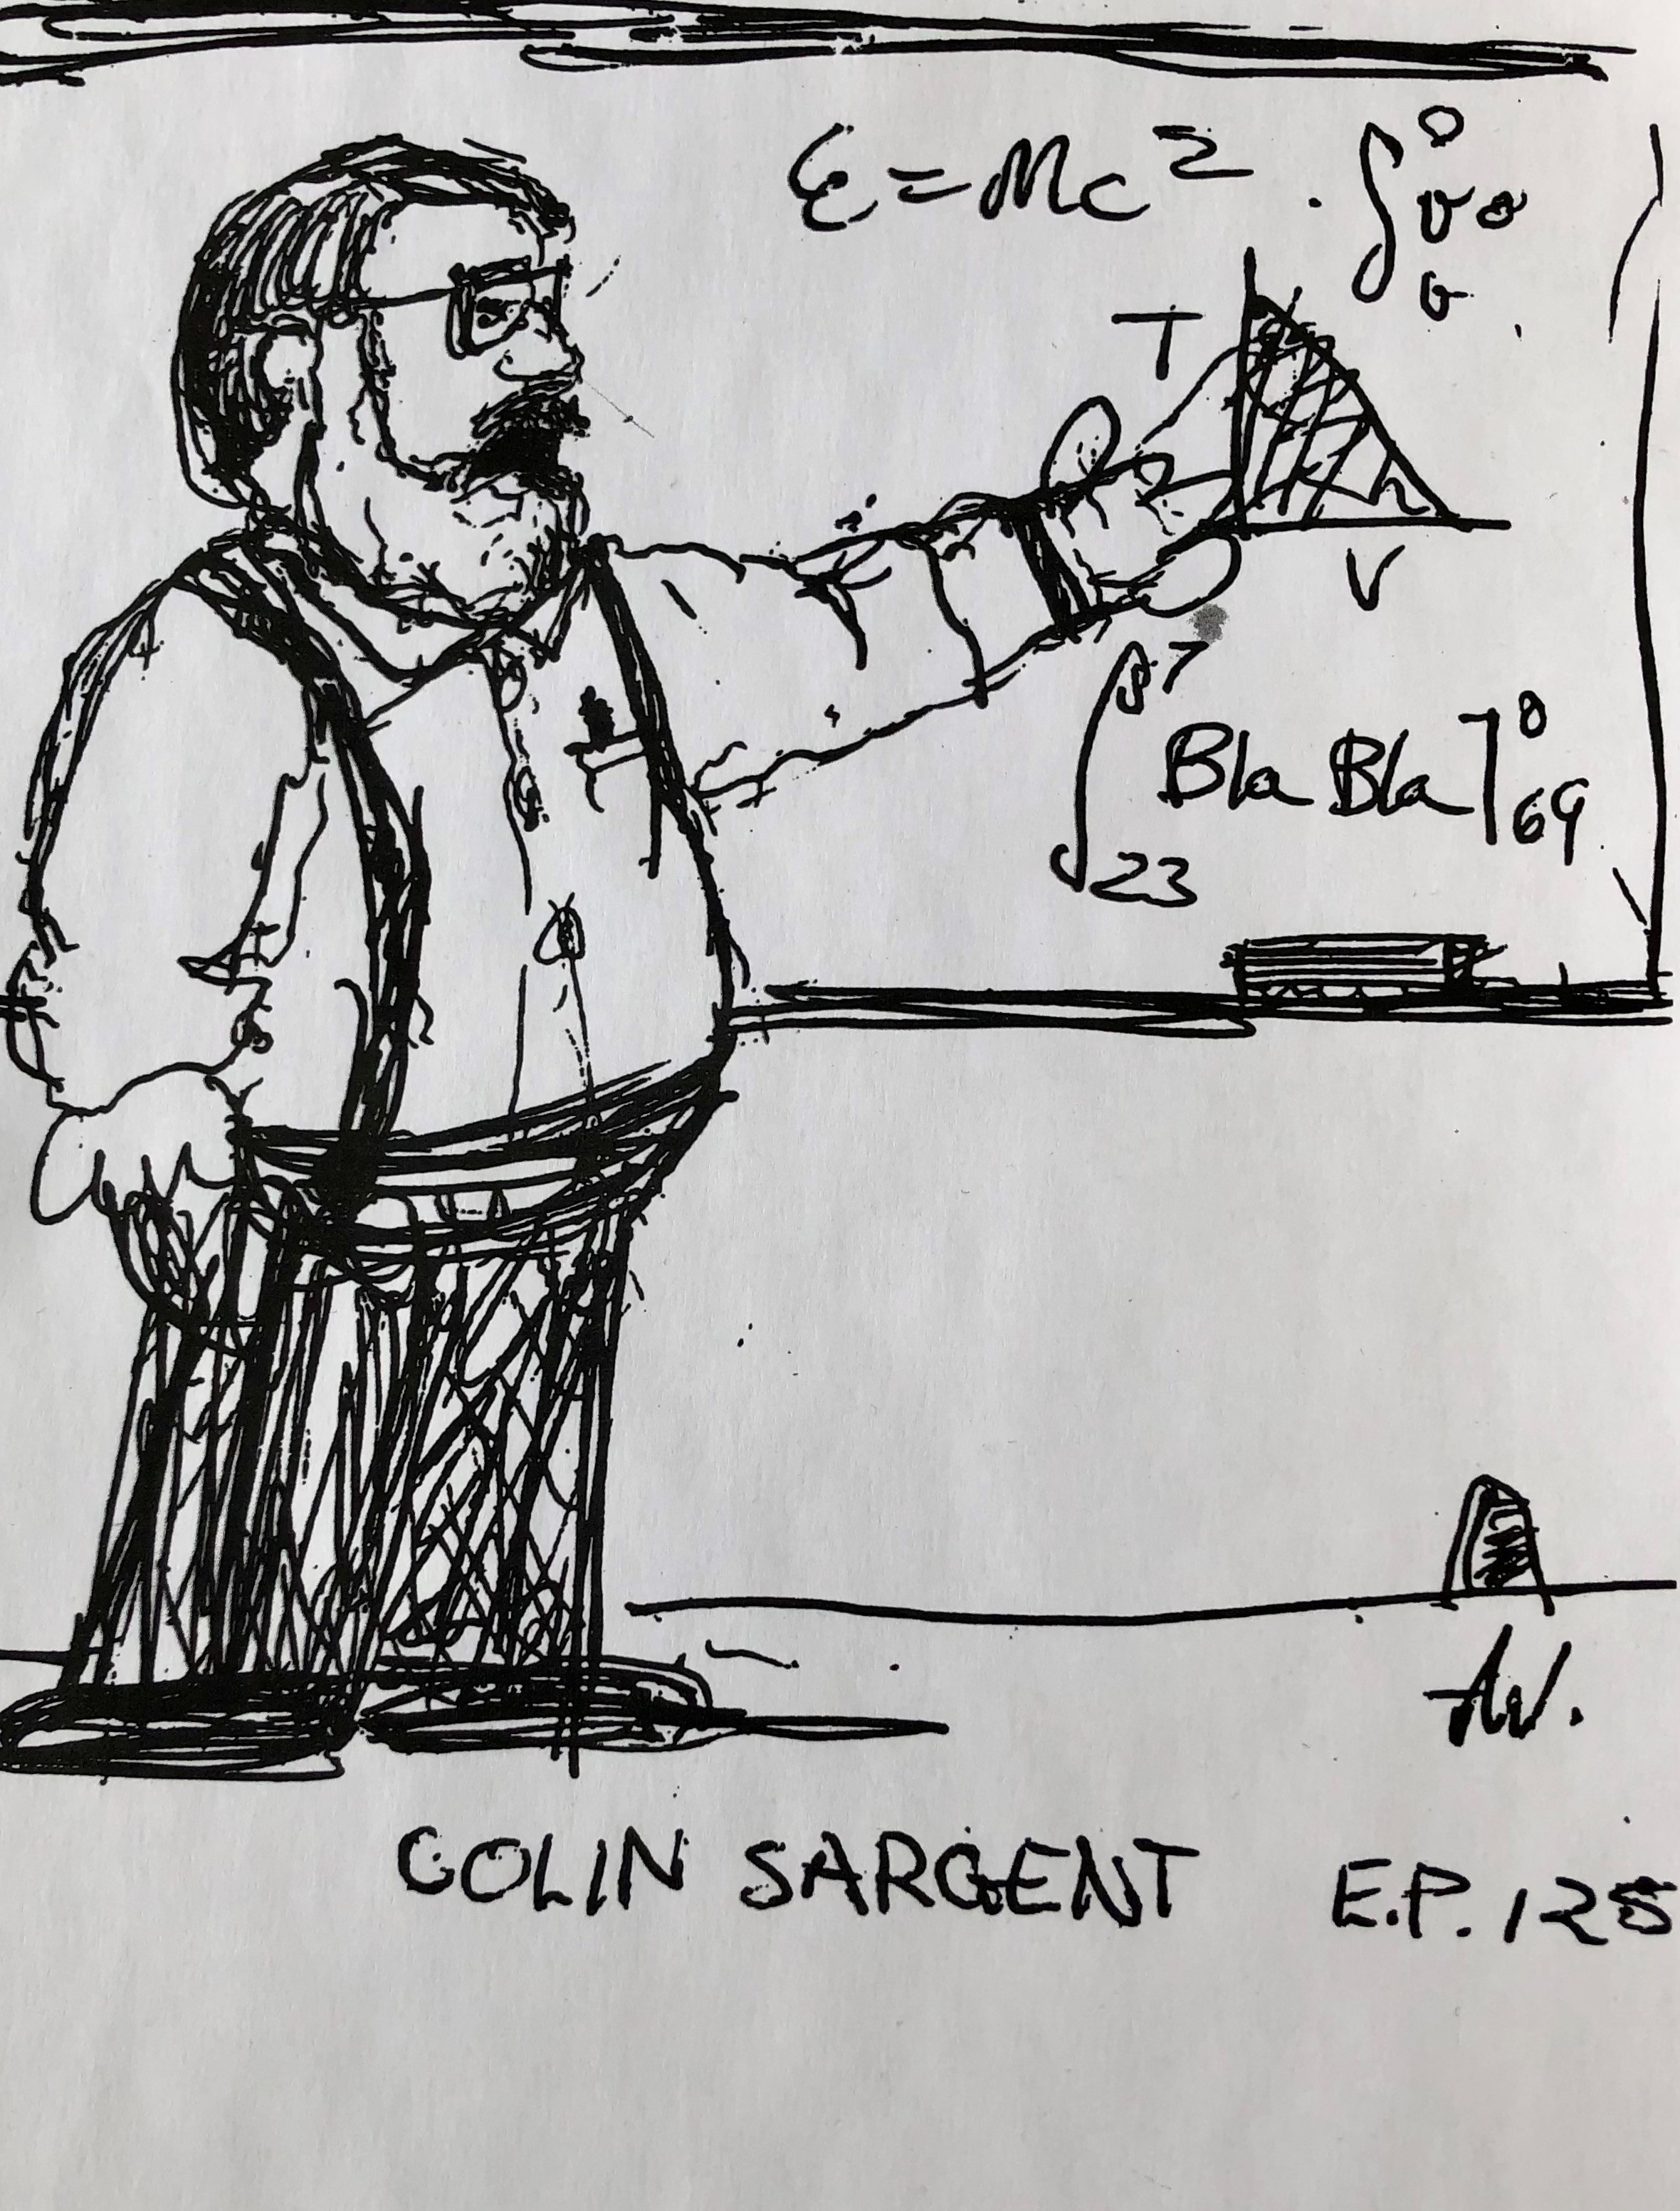 Colin Sargent